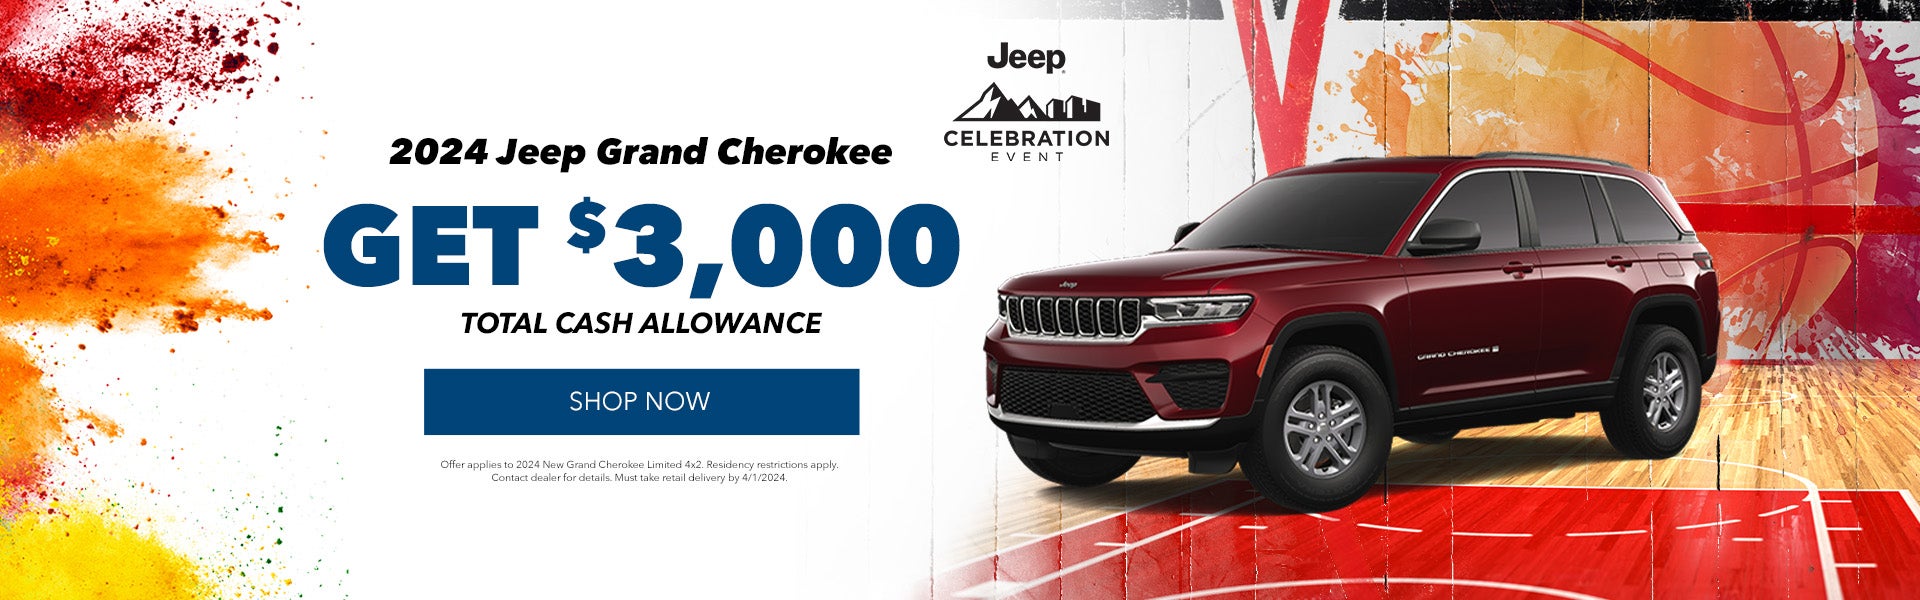 2024 Jeep Grand Cherokee $3,000 Cash Allowance